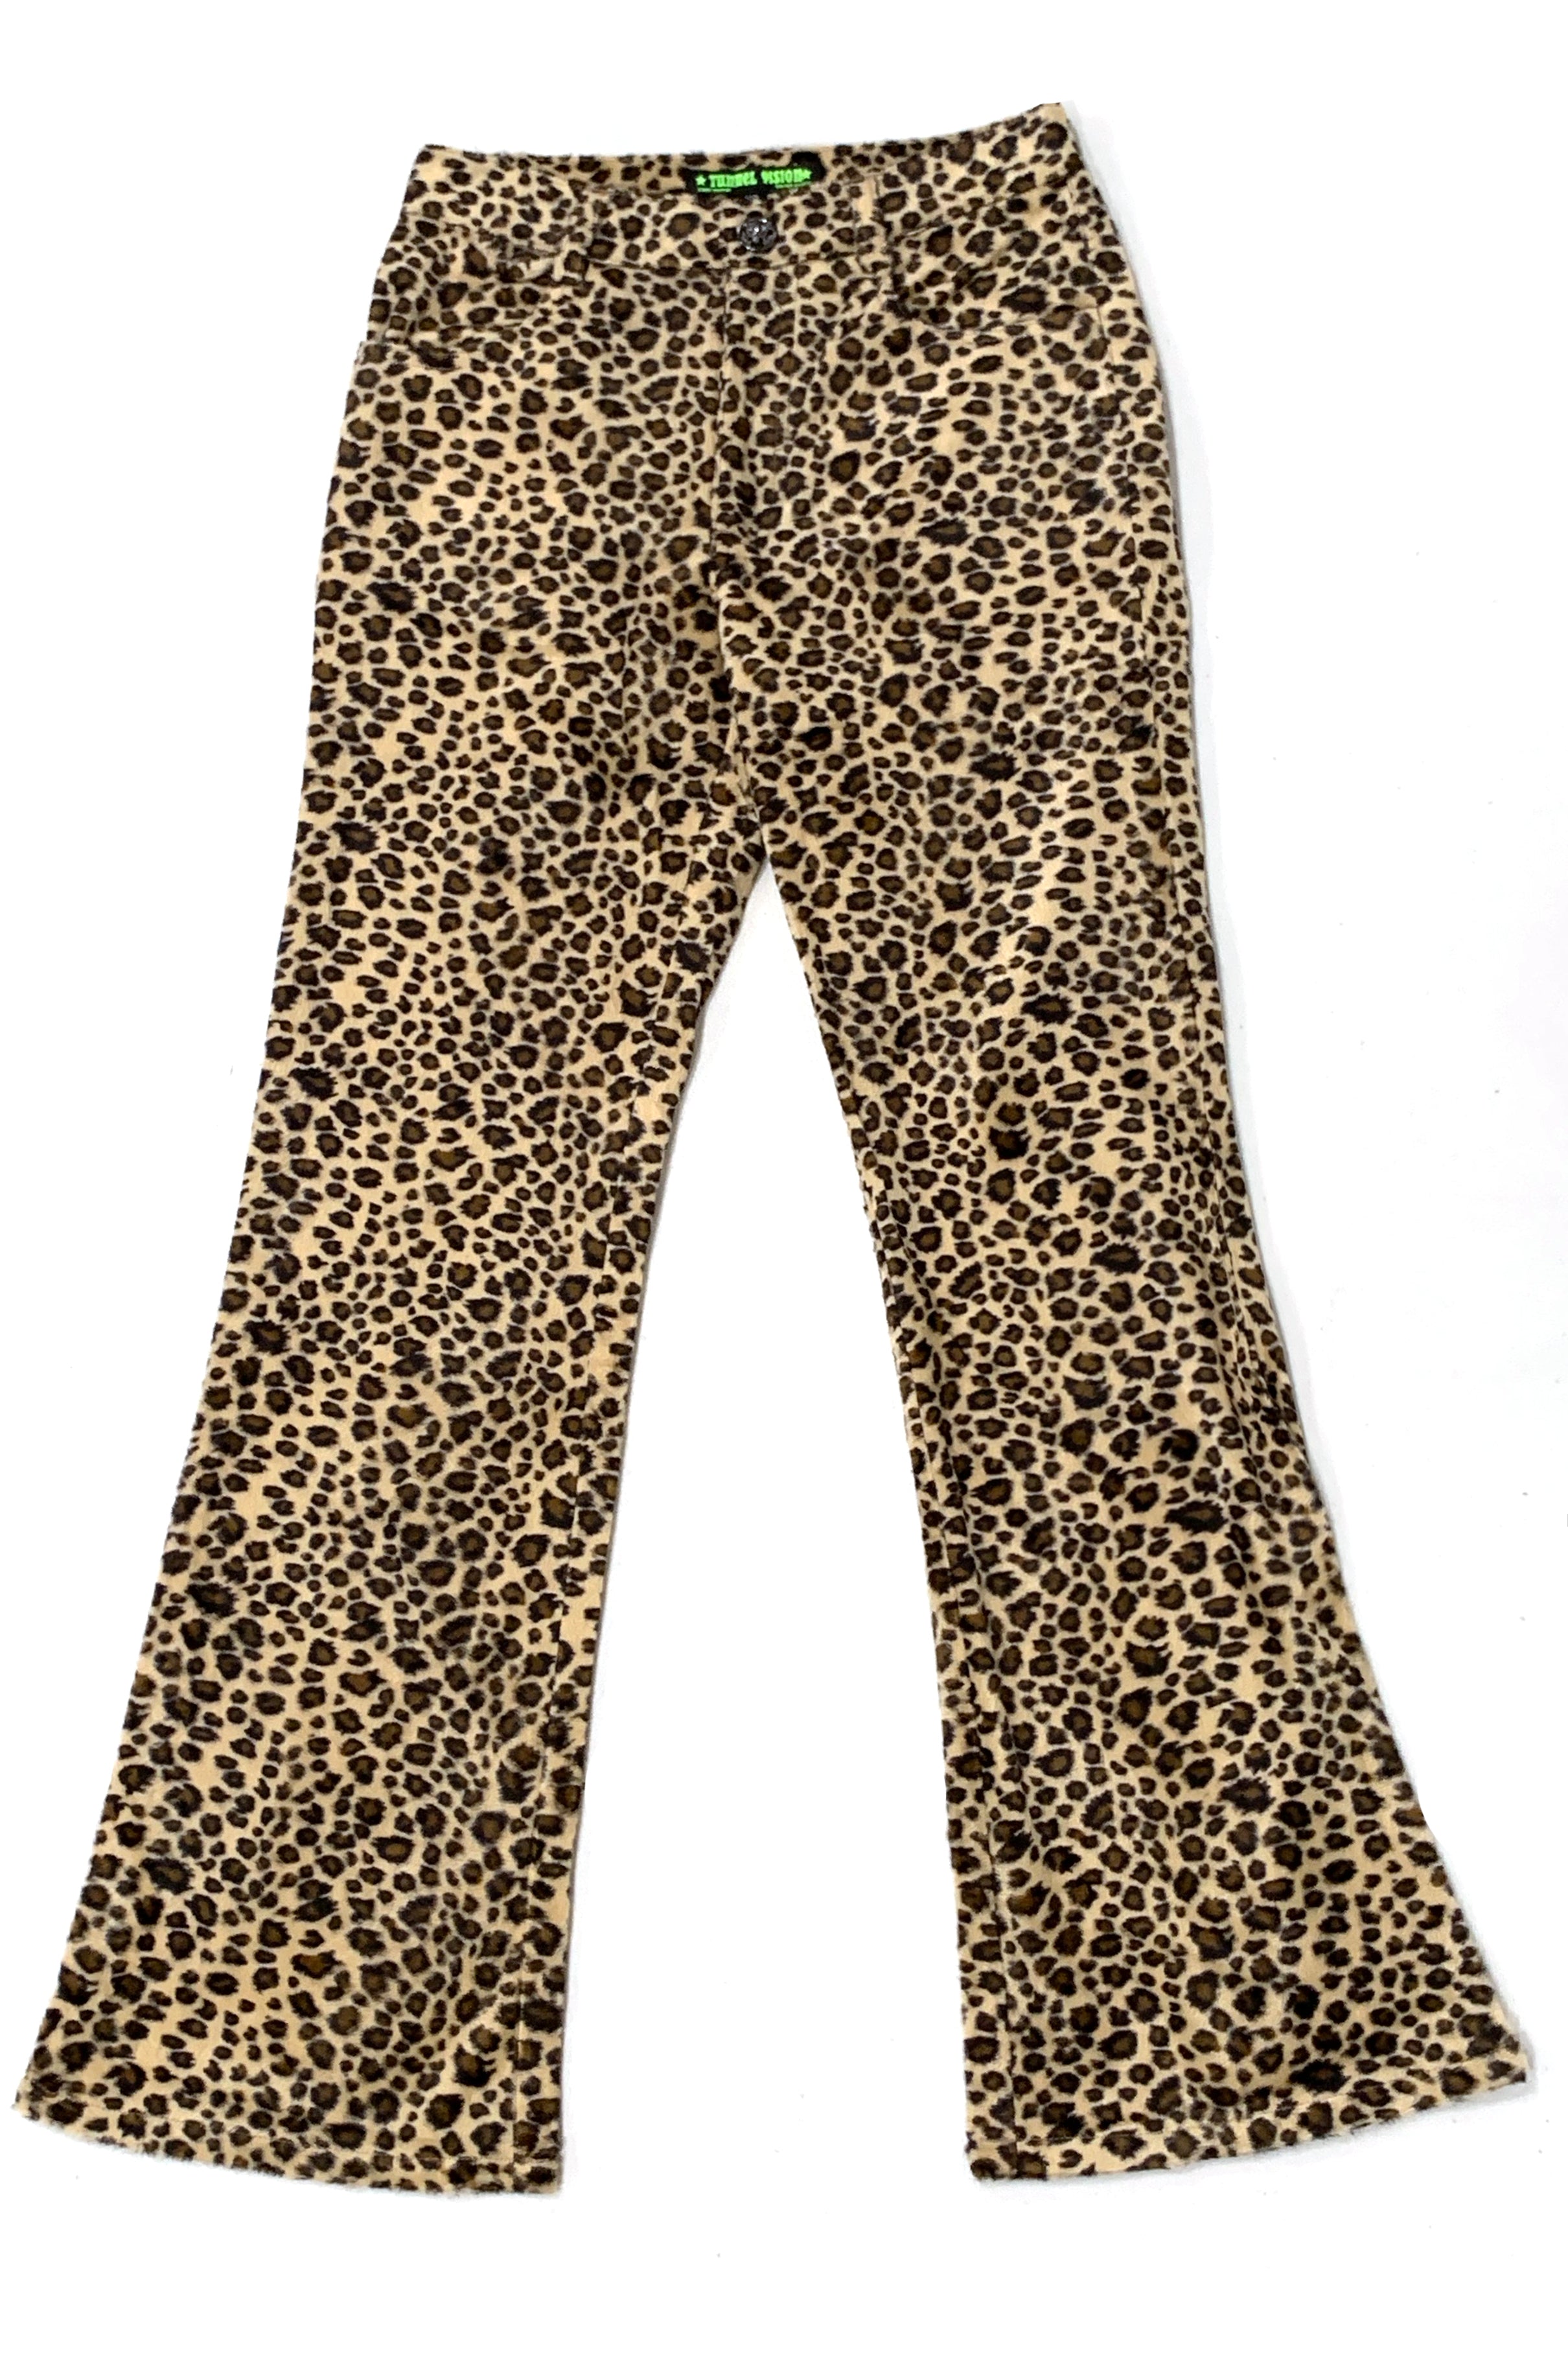 Cheetah Ladies Microfibre Track Pants - CL-5988(R)